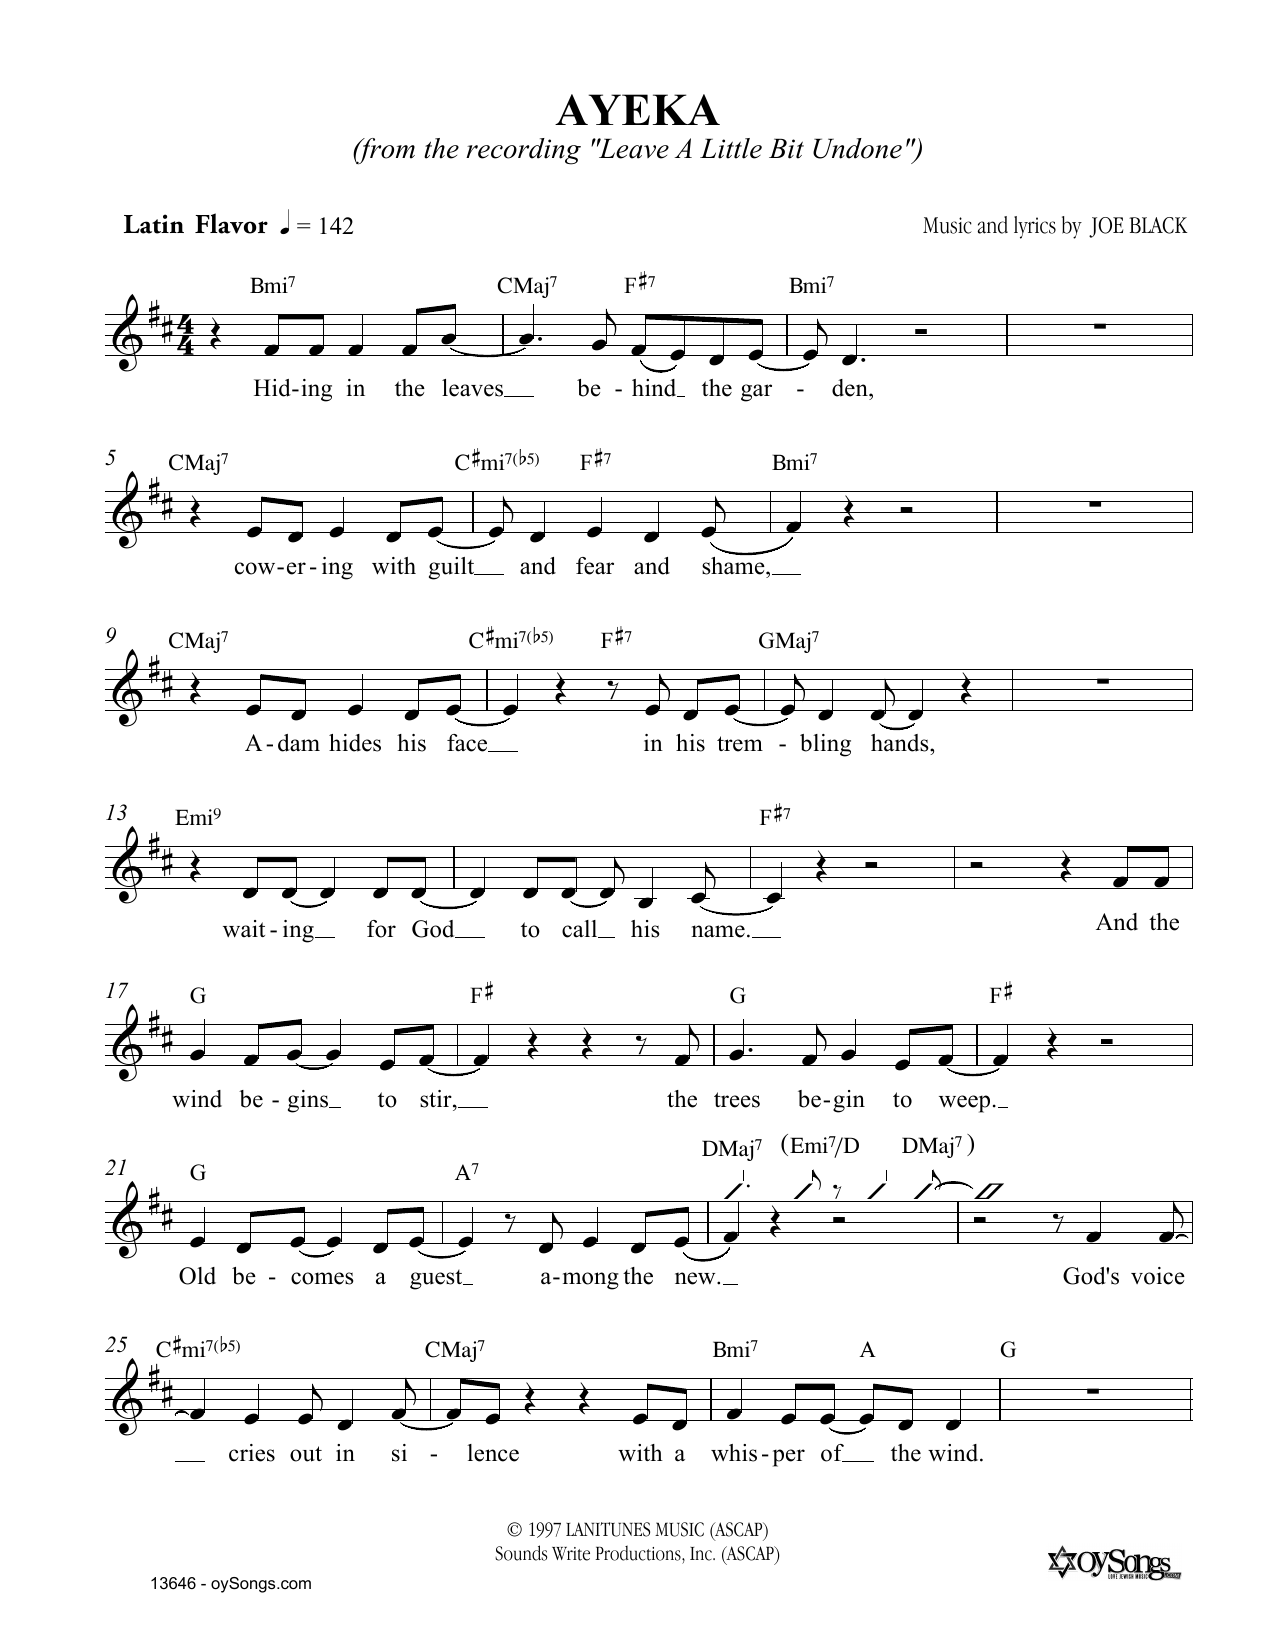 Joe Black Ayeka Sheet Music Notes & Chords for Melody Line, Lyrics & Chords - Download or Print PDF